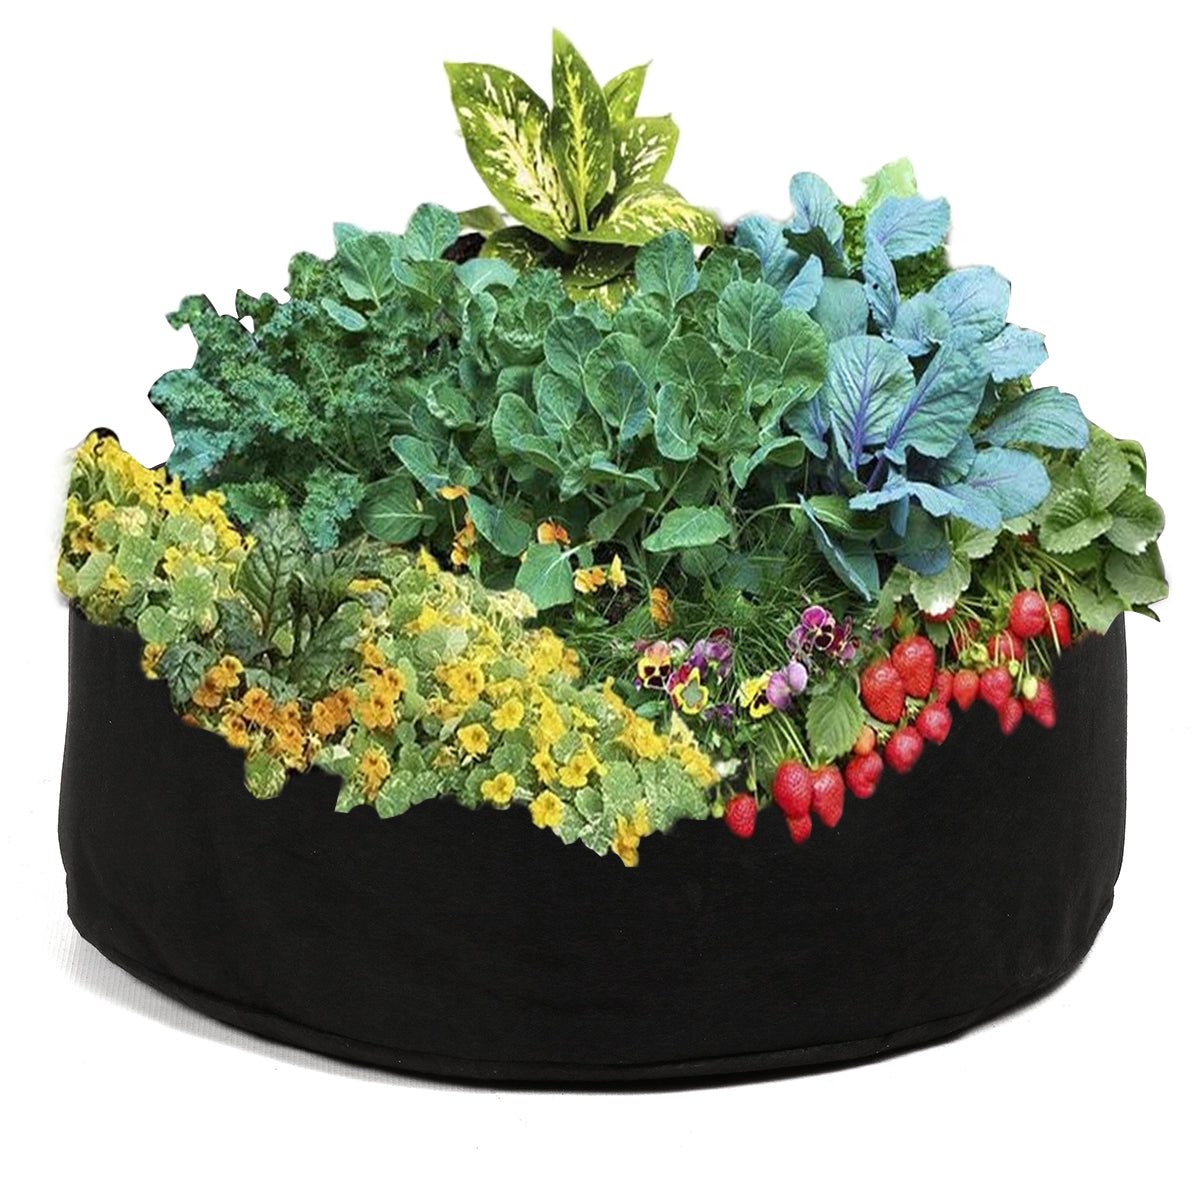 80x30cm Planting Grow Bag Raised Plant Bed Garden Flower Planter Vegetable Bag